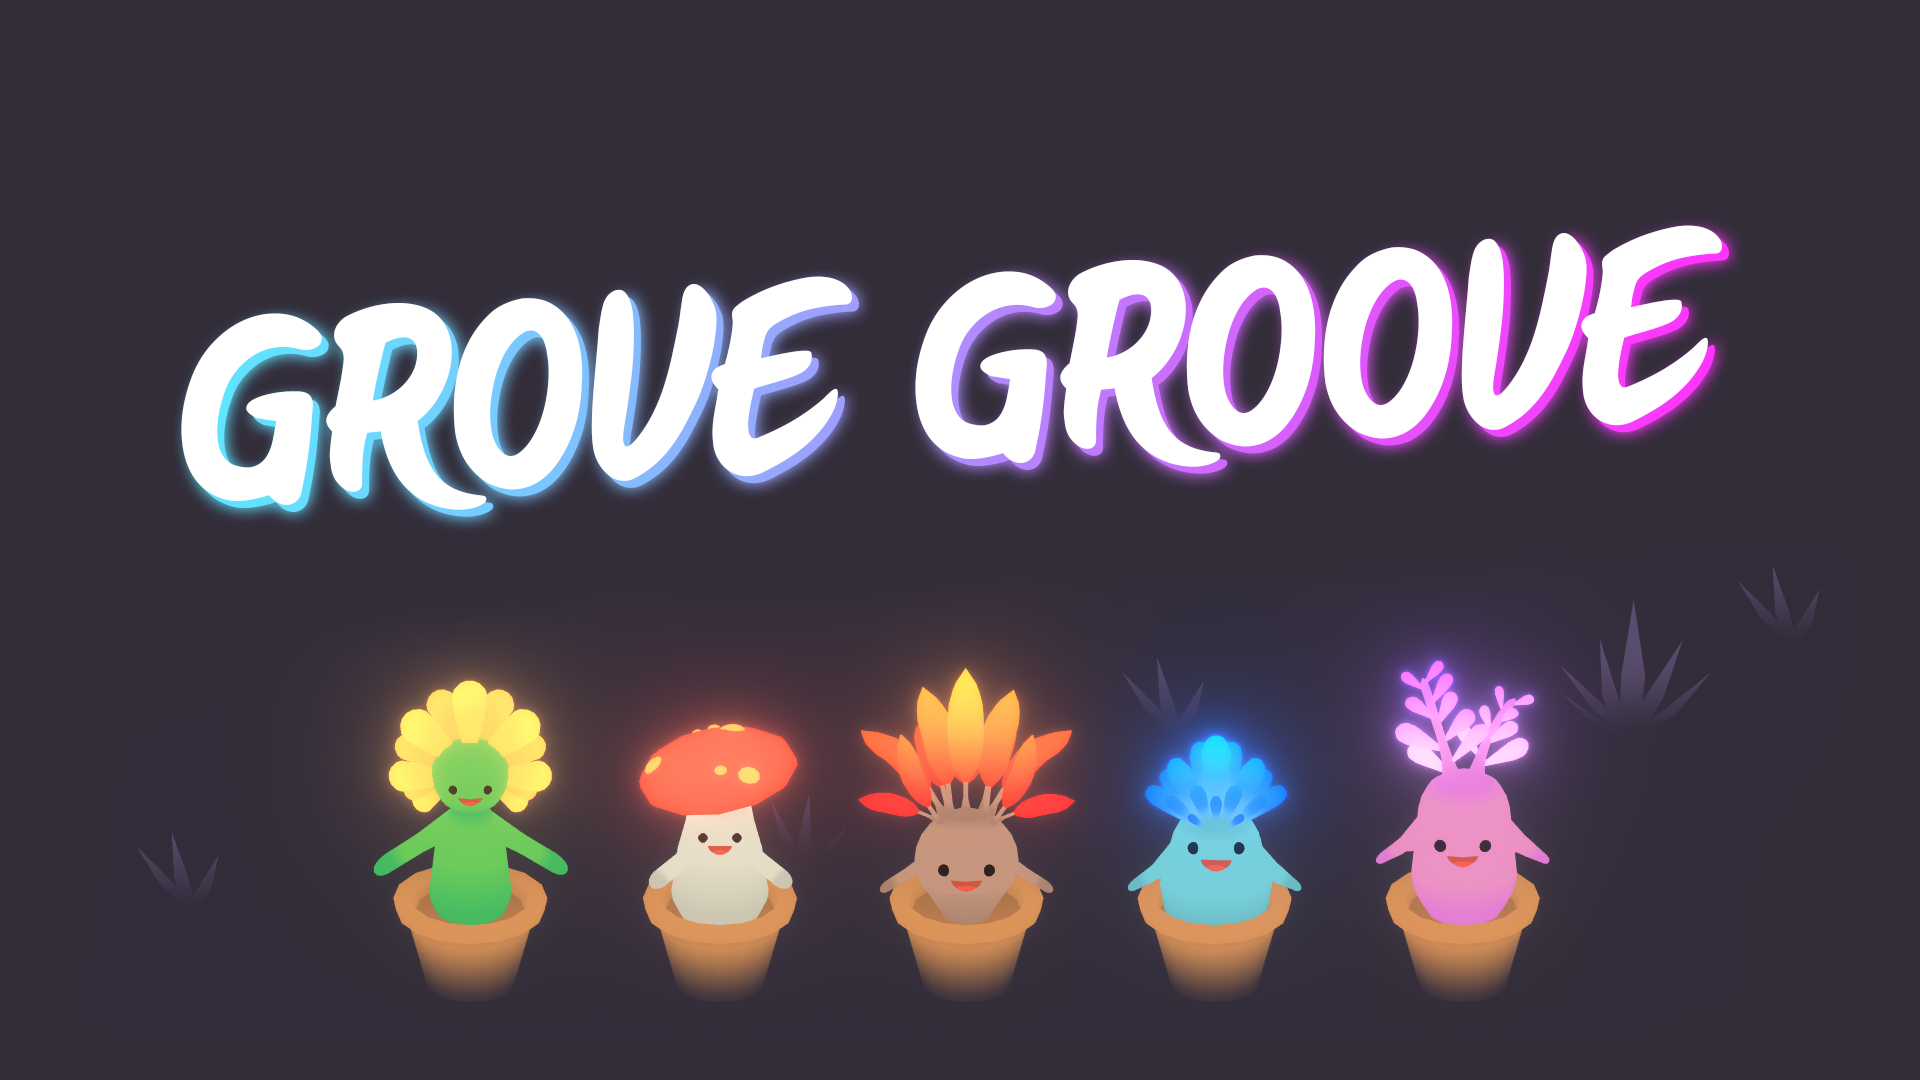 Grove Groove